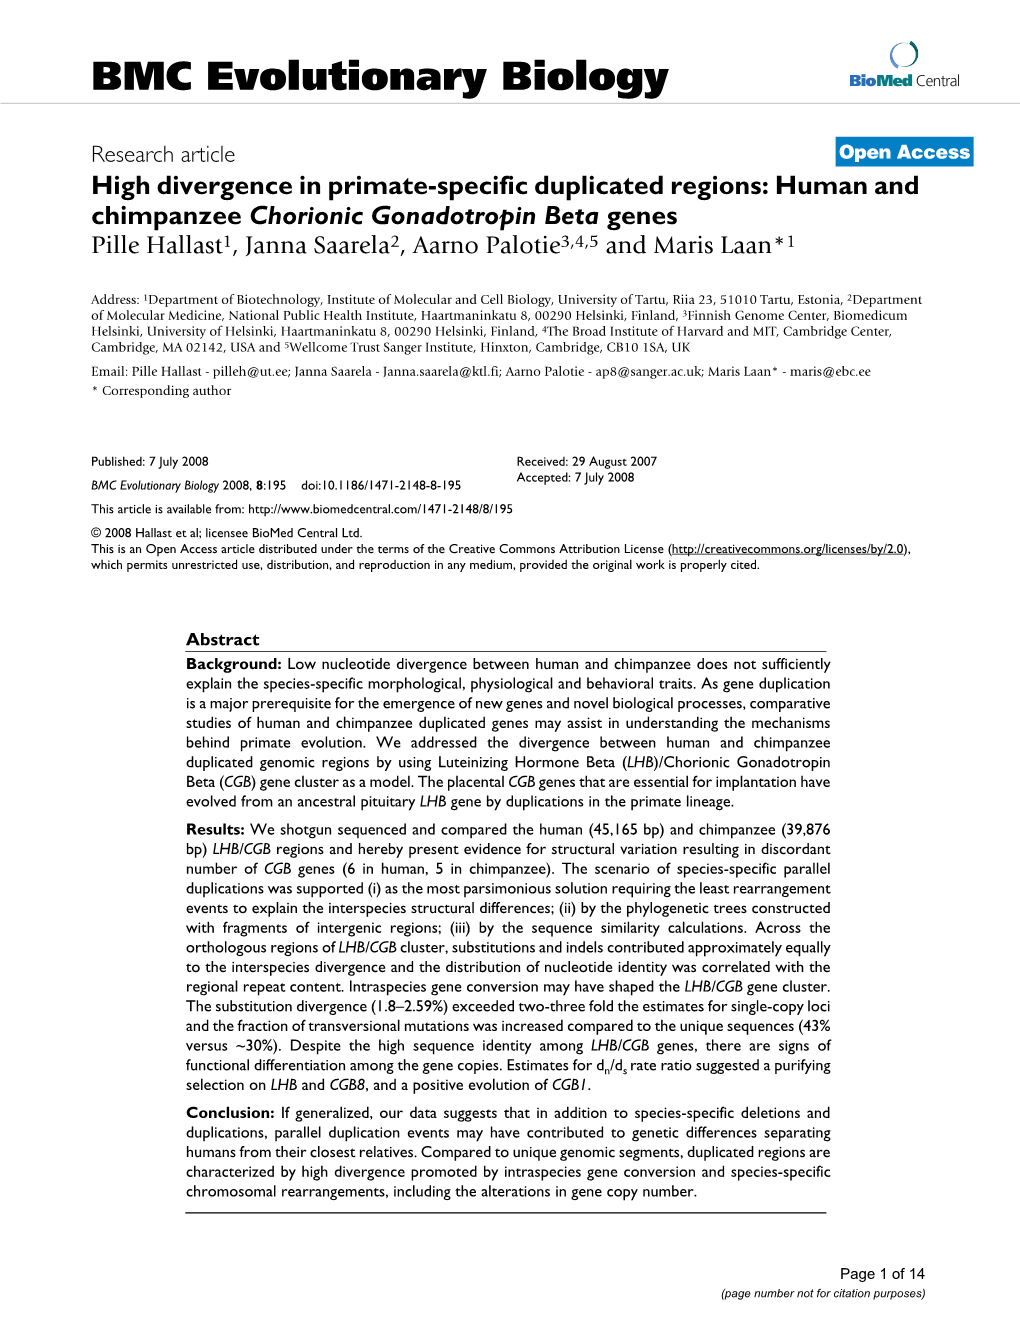 Human and Chimpanzee Chorionic Gonadotropin Beta Genes Pille Hallast1, Janna Saarela2, Aarno Palotie3,4,5 and Maris Laan*1